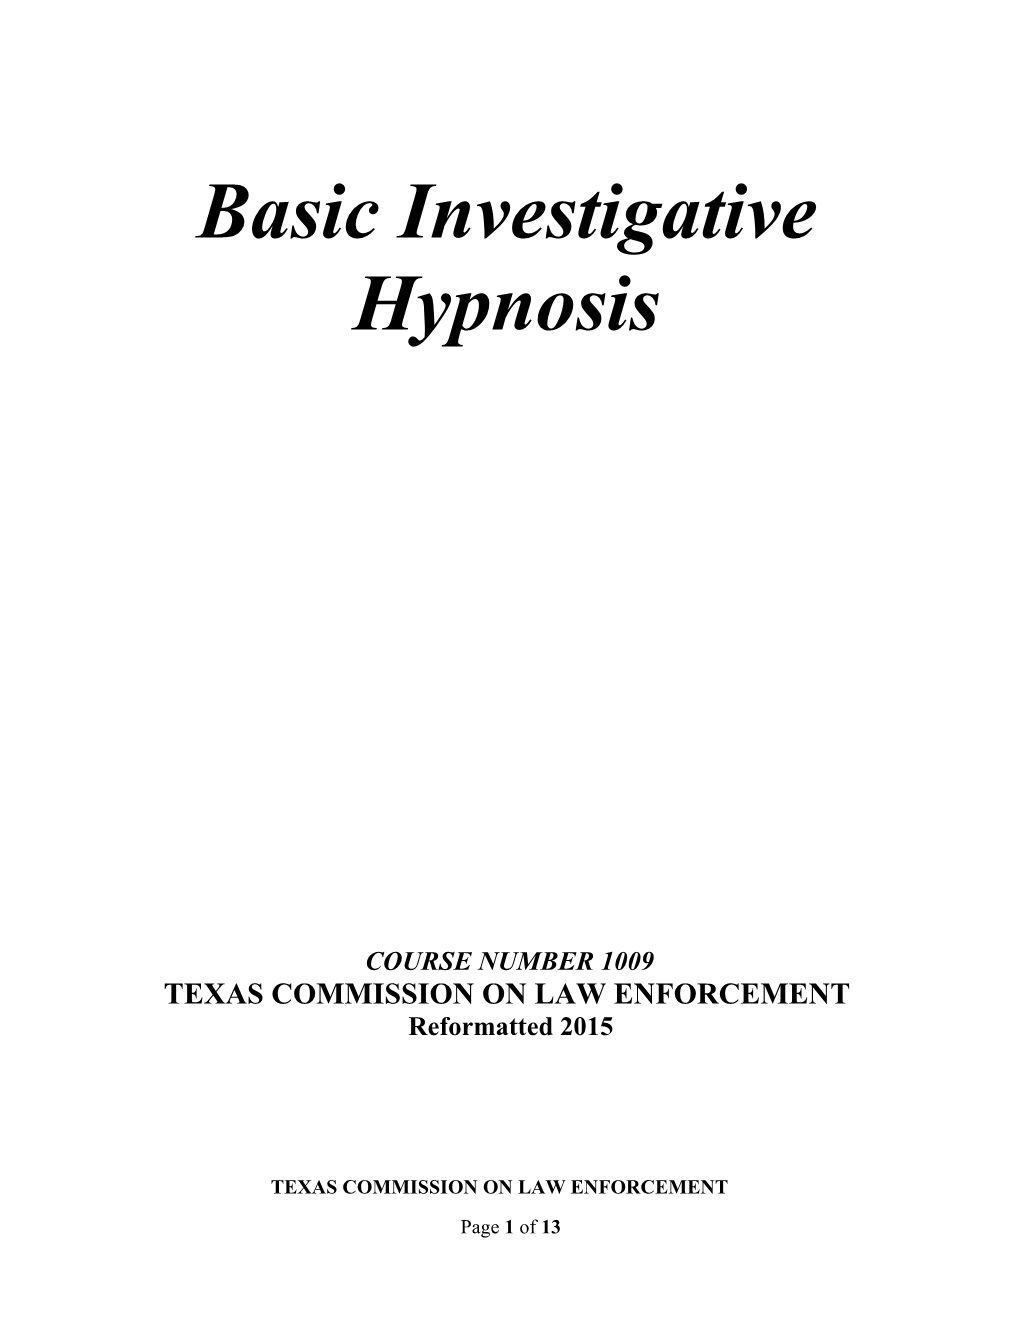 Basic Investigative Hypnosis